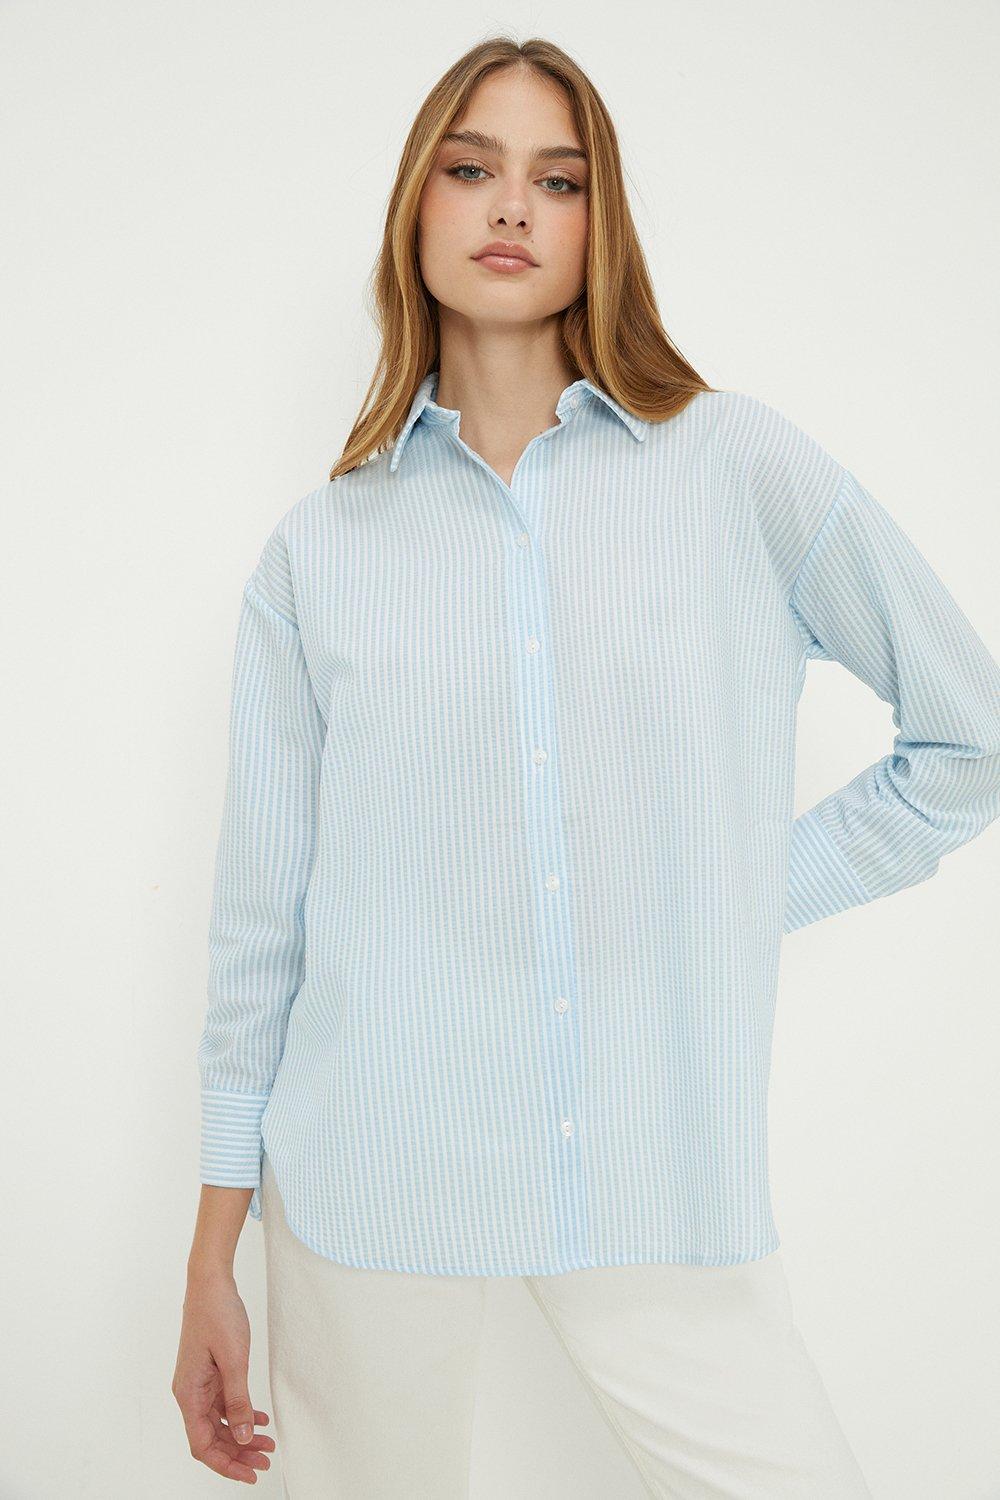 Women’s Stripe Roll Sleeve Shirt With Pockets - blue - M